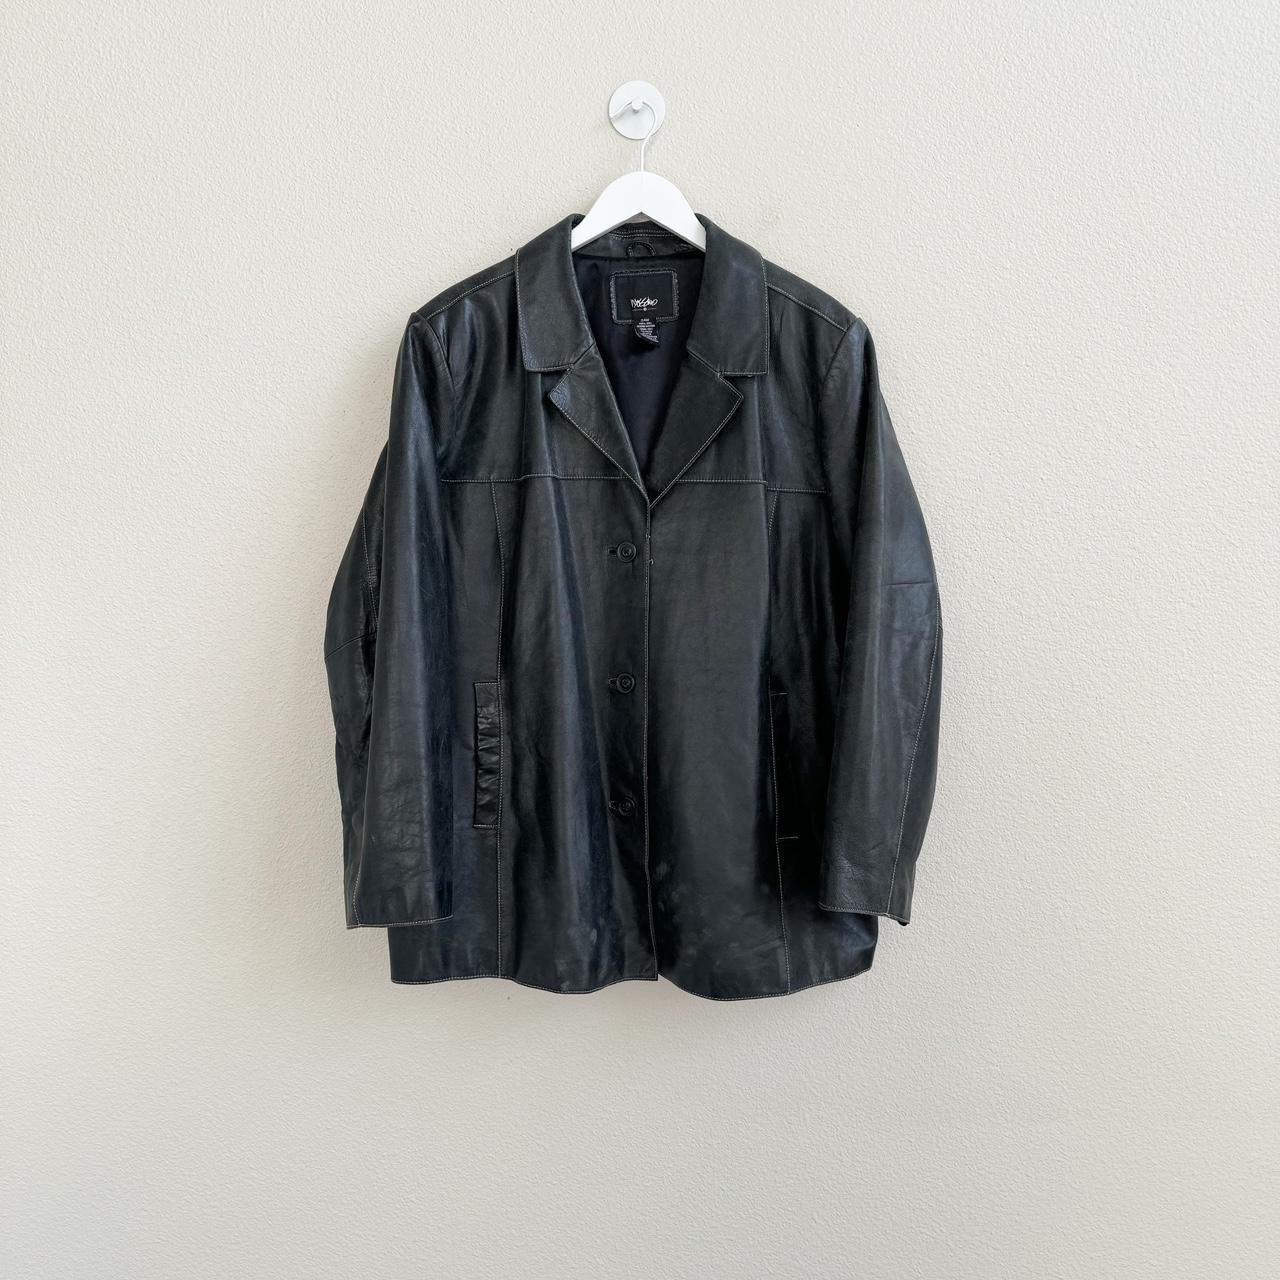 Y2K Black Leather Jacket. Button up. Great... - Depop